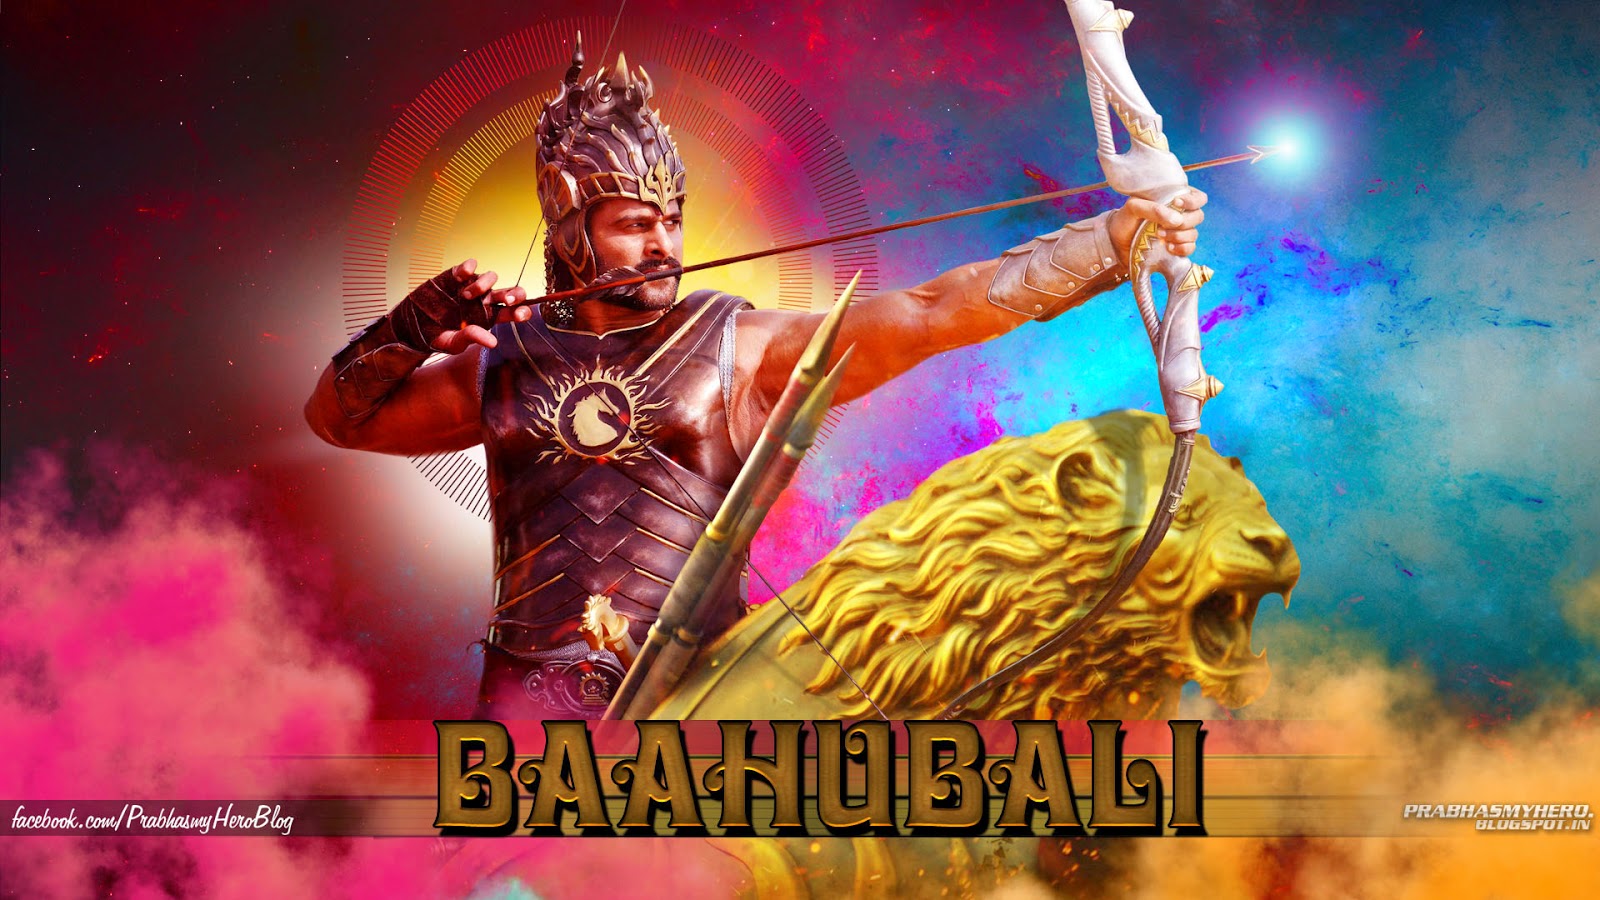 baahubali壁紙,神話,架空の人物,映画,ヒーロー,cgアートワーク